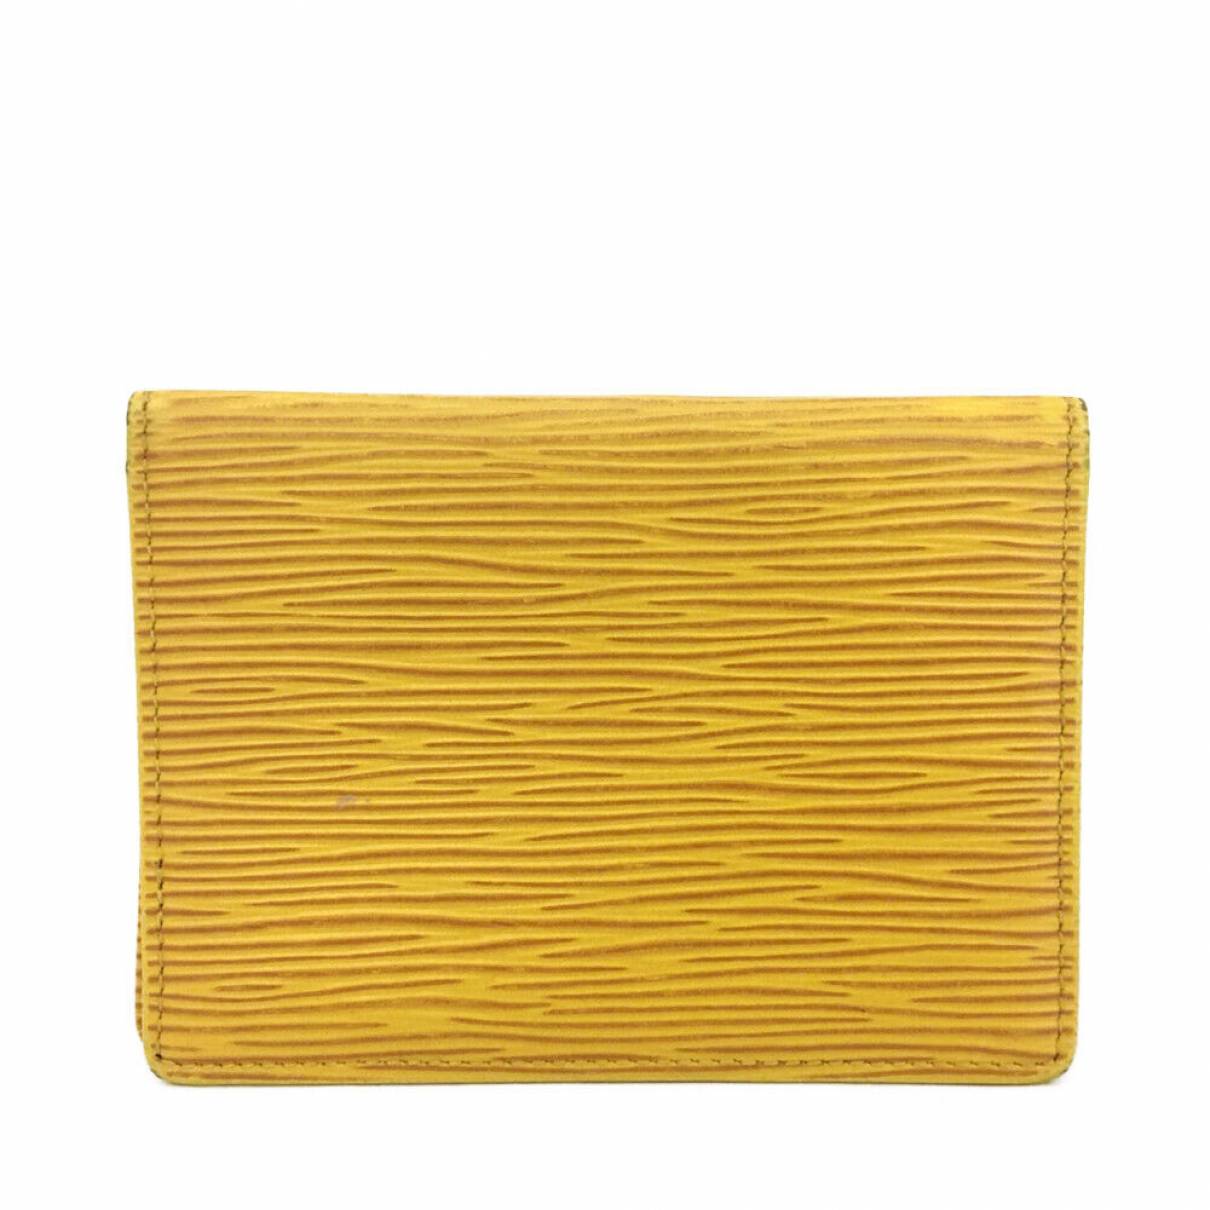 yellow louis vuitton wallet